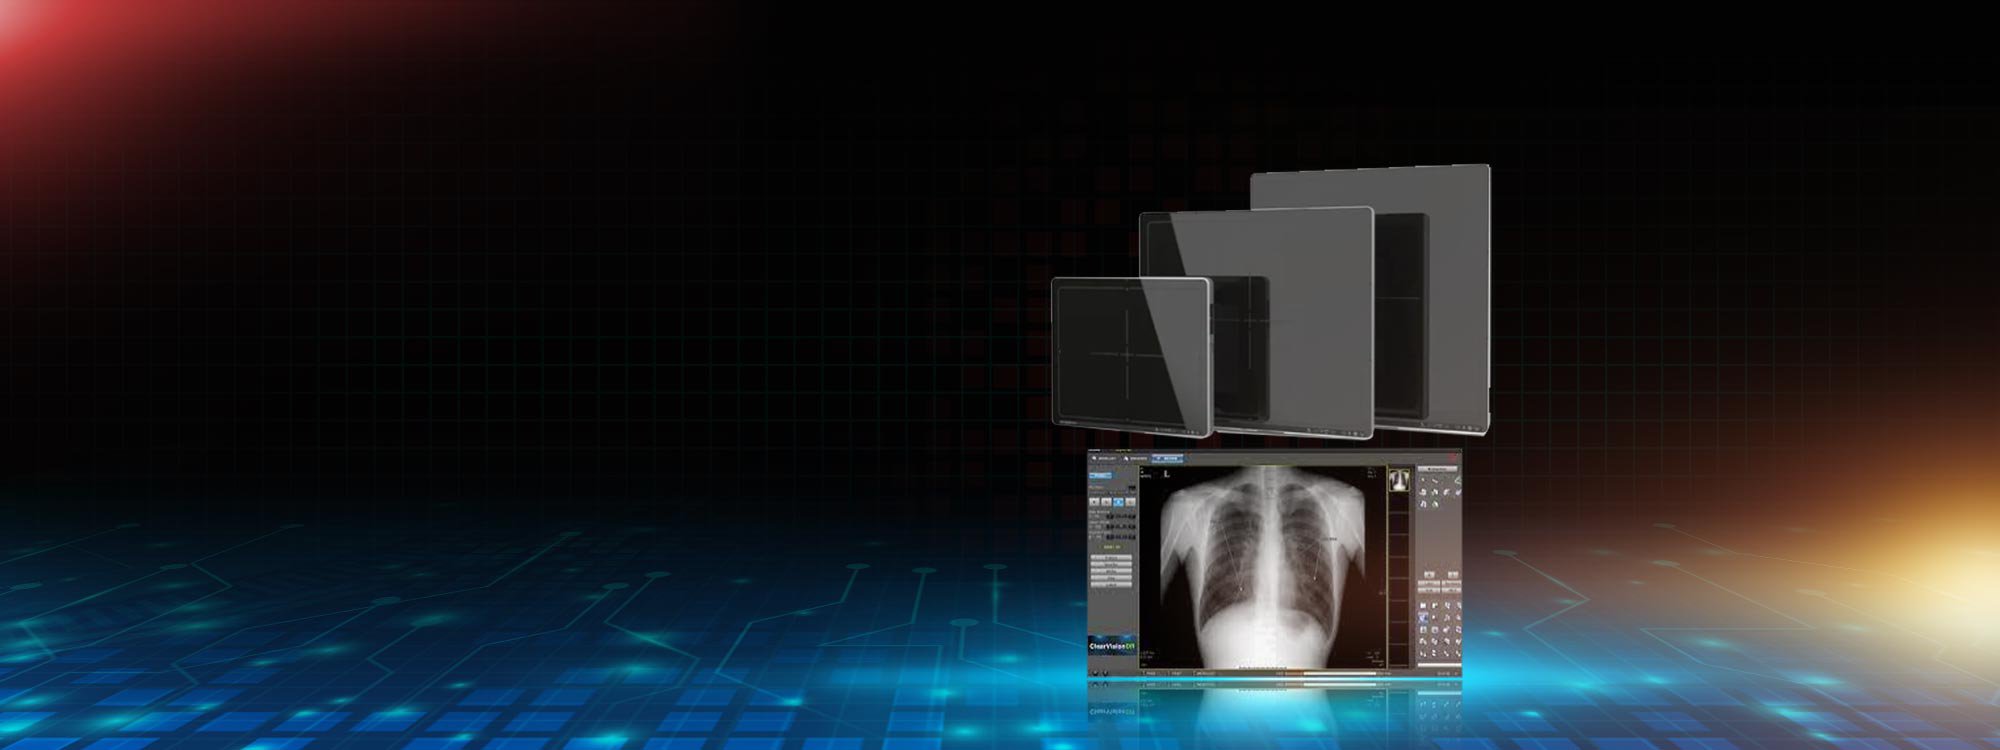 Digital X-Ray Equipment Technical Service